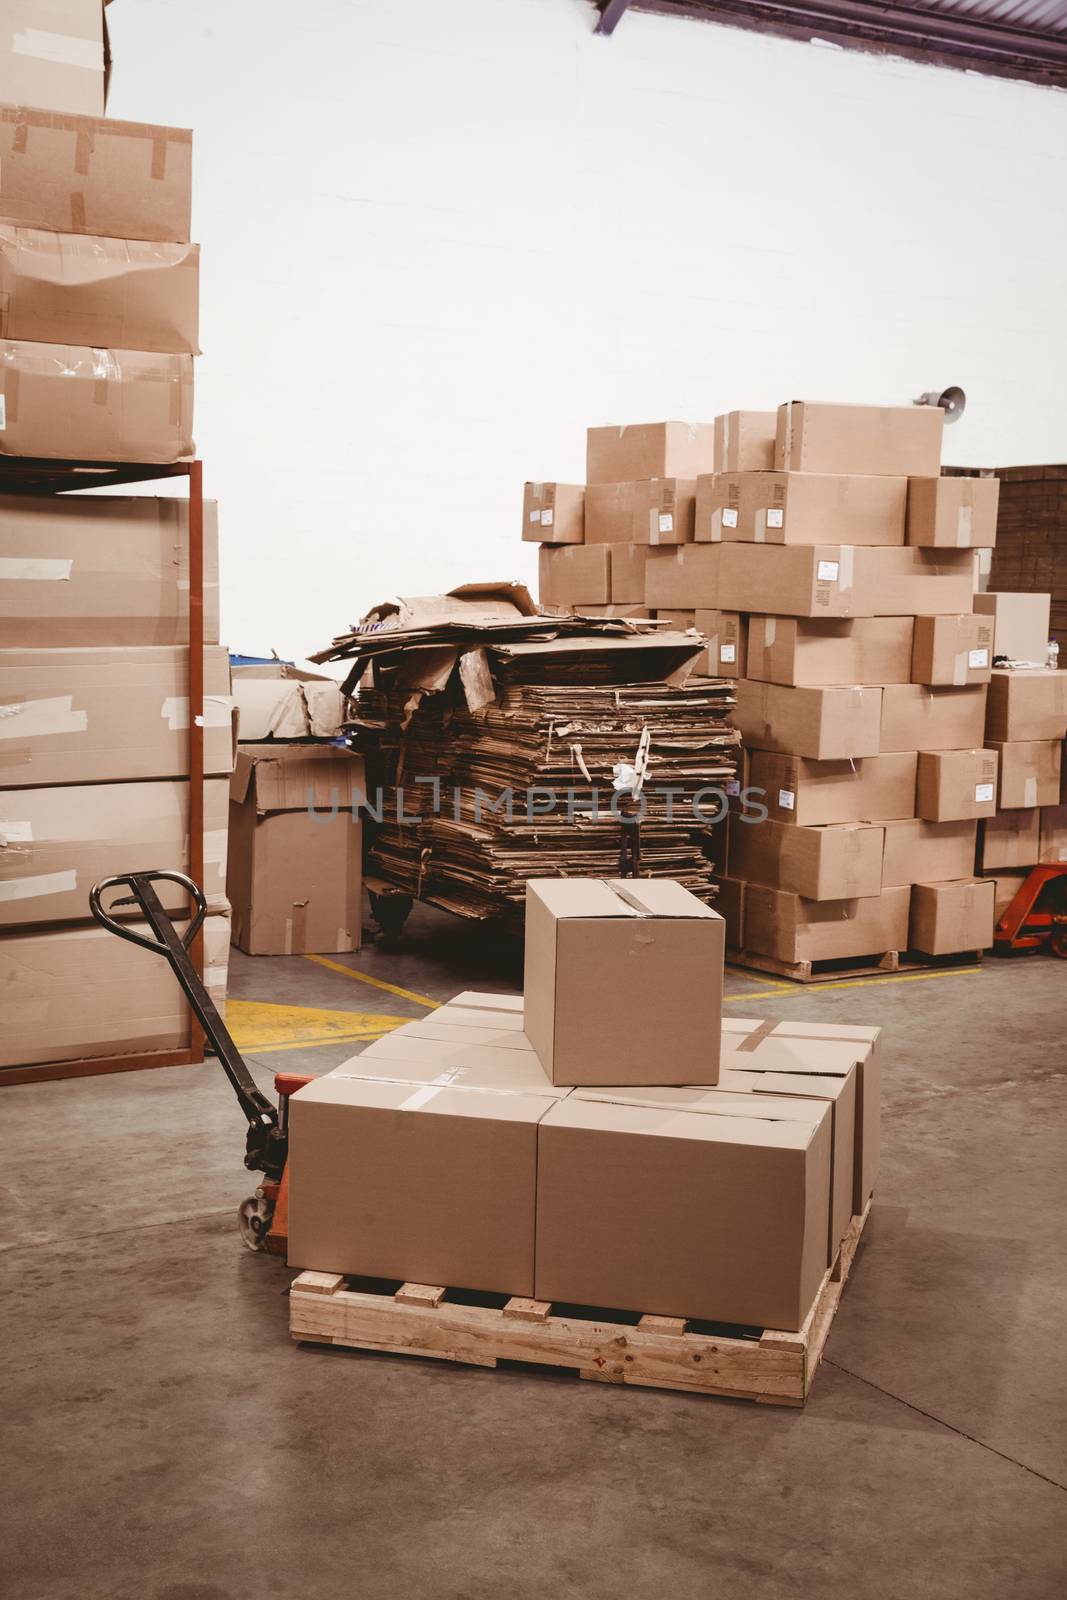 Cardboard boxes in warehouse by Wavebreakmedia